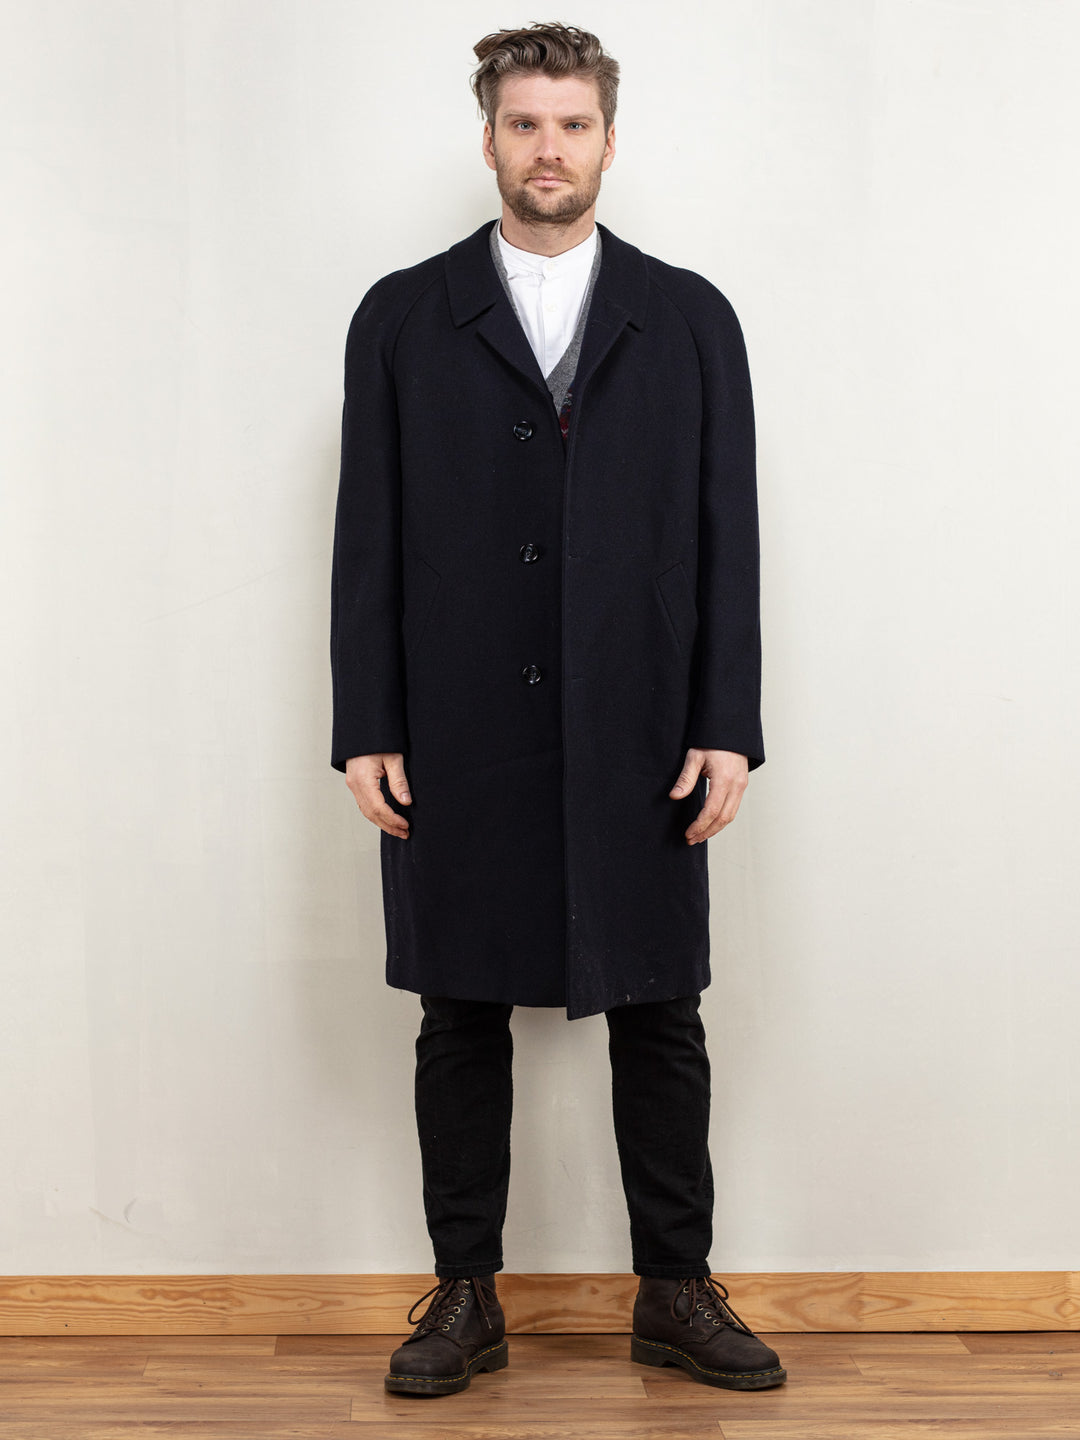 Men Wool Coat 80's vintage navy blue winter outerwear layering everyday minimalist preppy longline coat office wear sustainable size large L